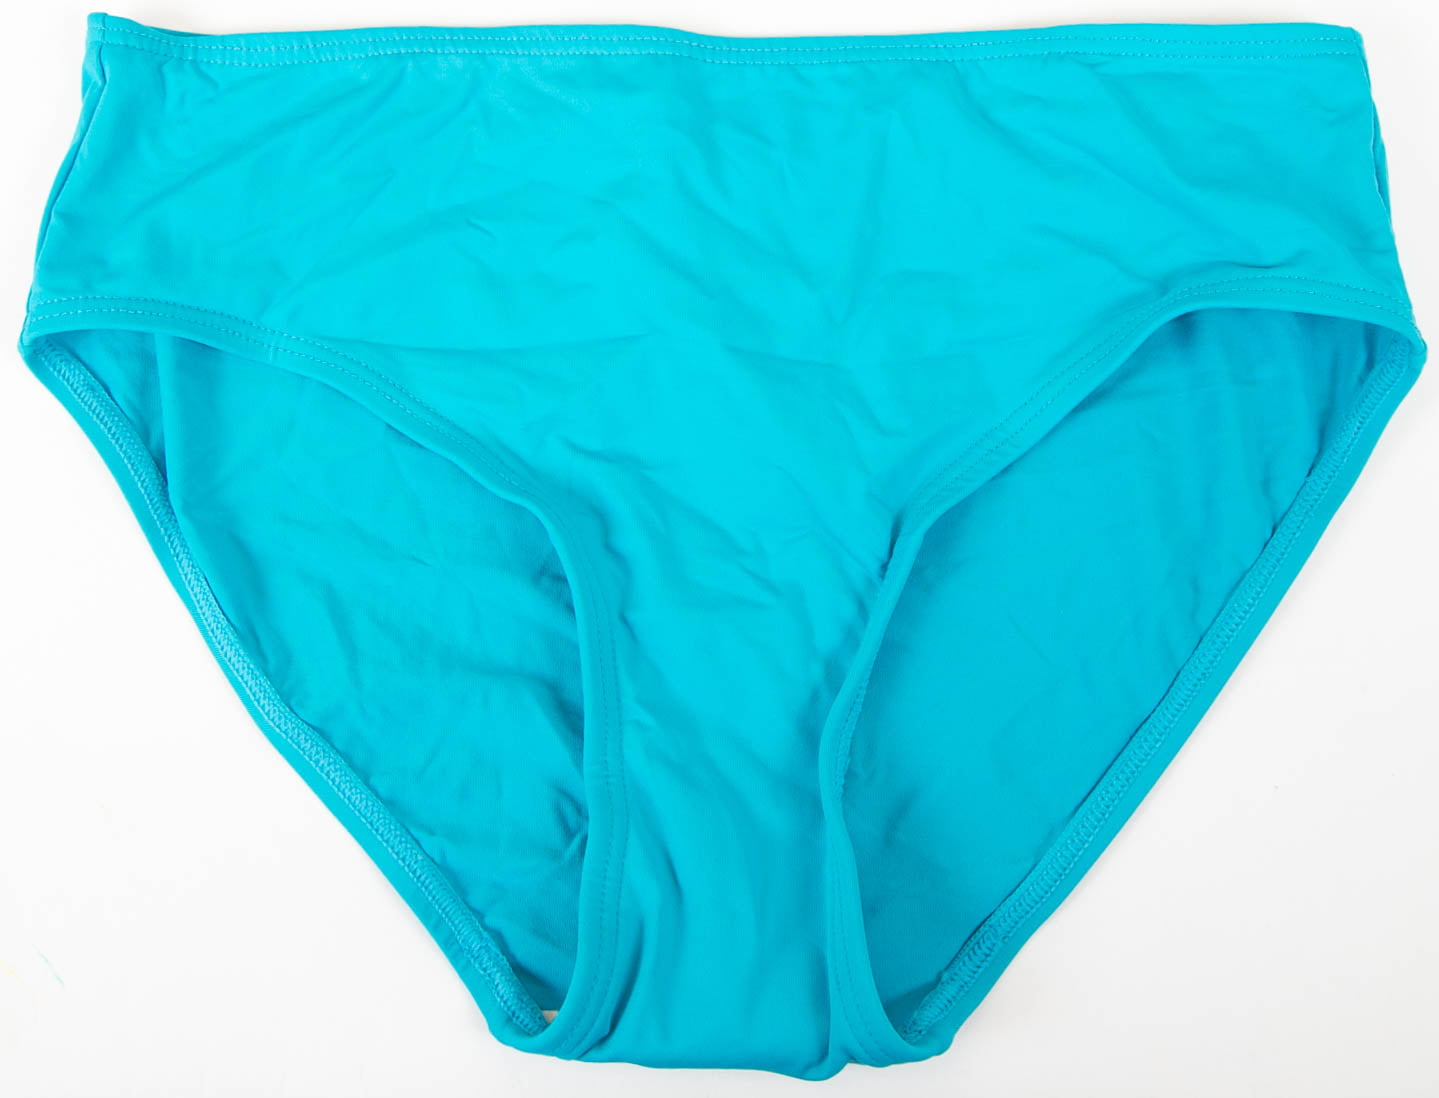 Coco Reef Women's Blue High Waisted Swim Bottoms - Walmart.com